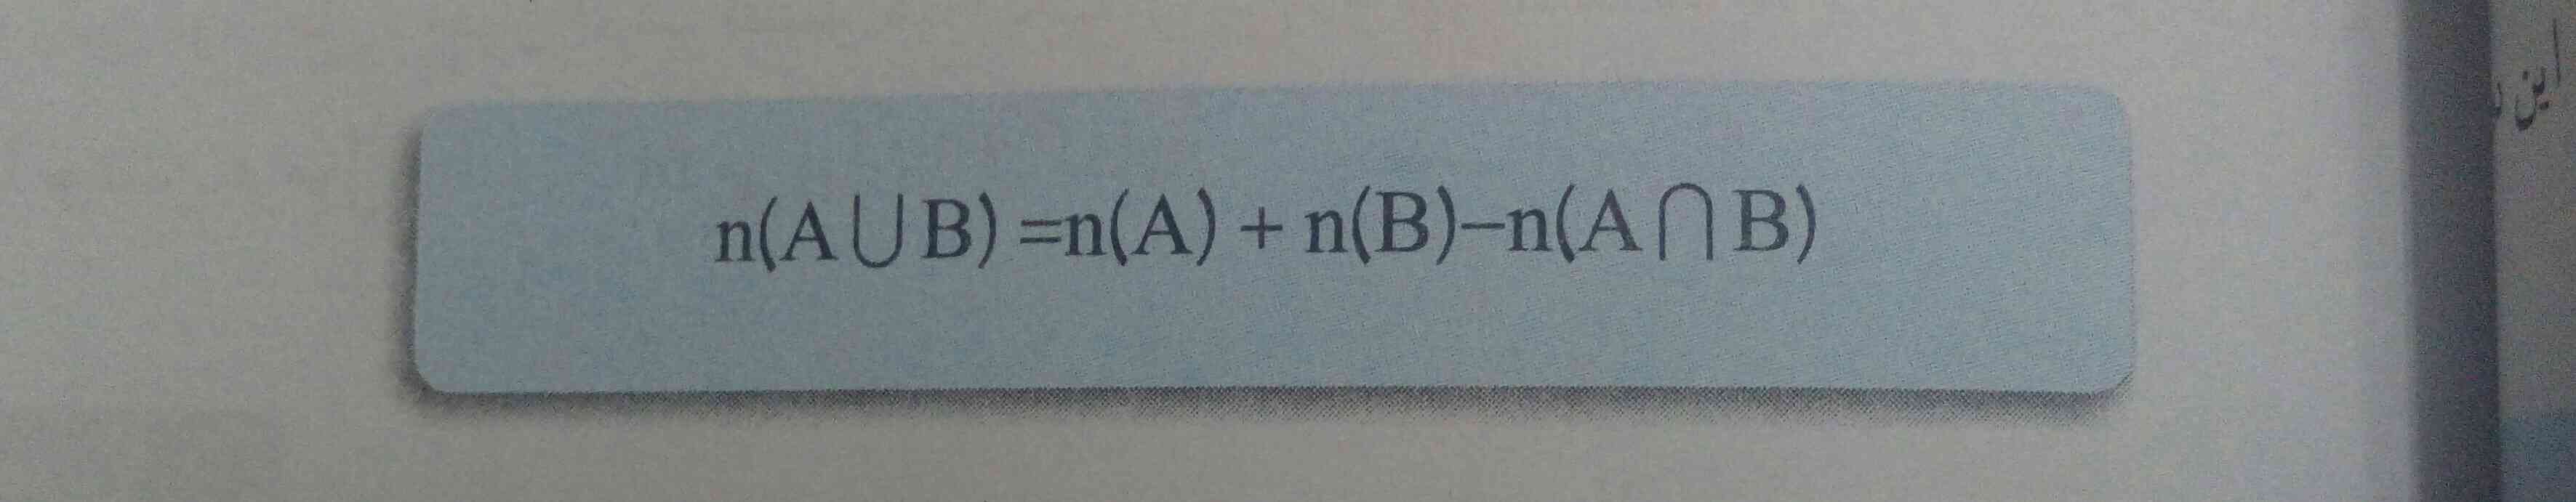 کسی میدونه این فرمول چیه؟